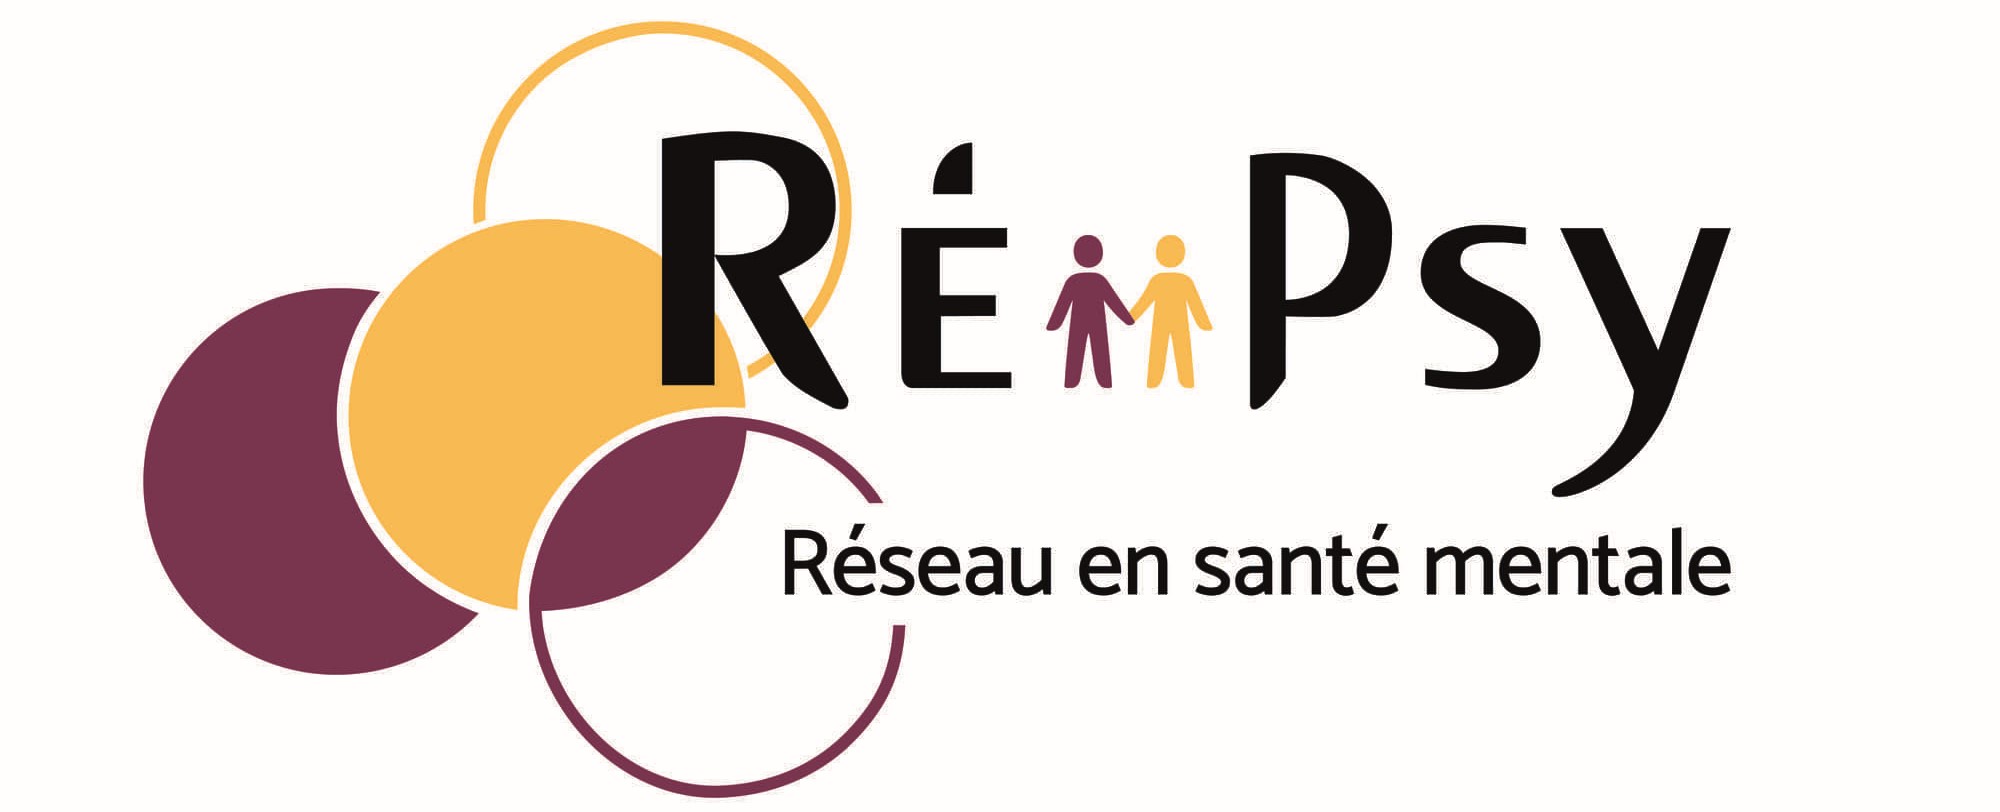 Logo-RePsy-reseau-en-sante-mentale